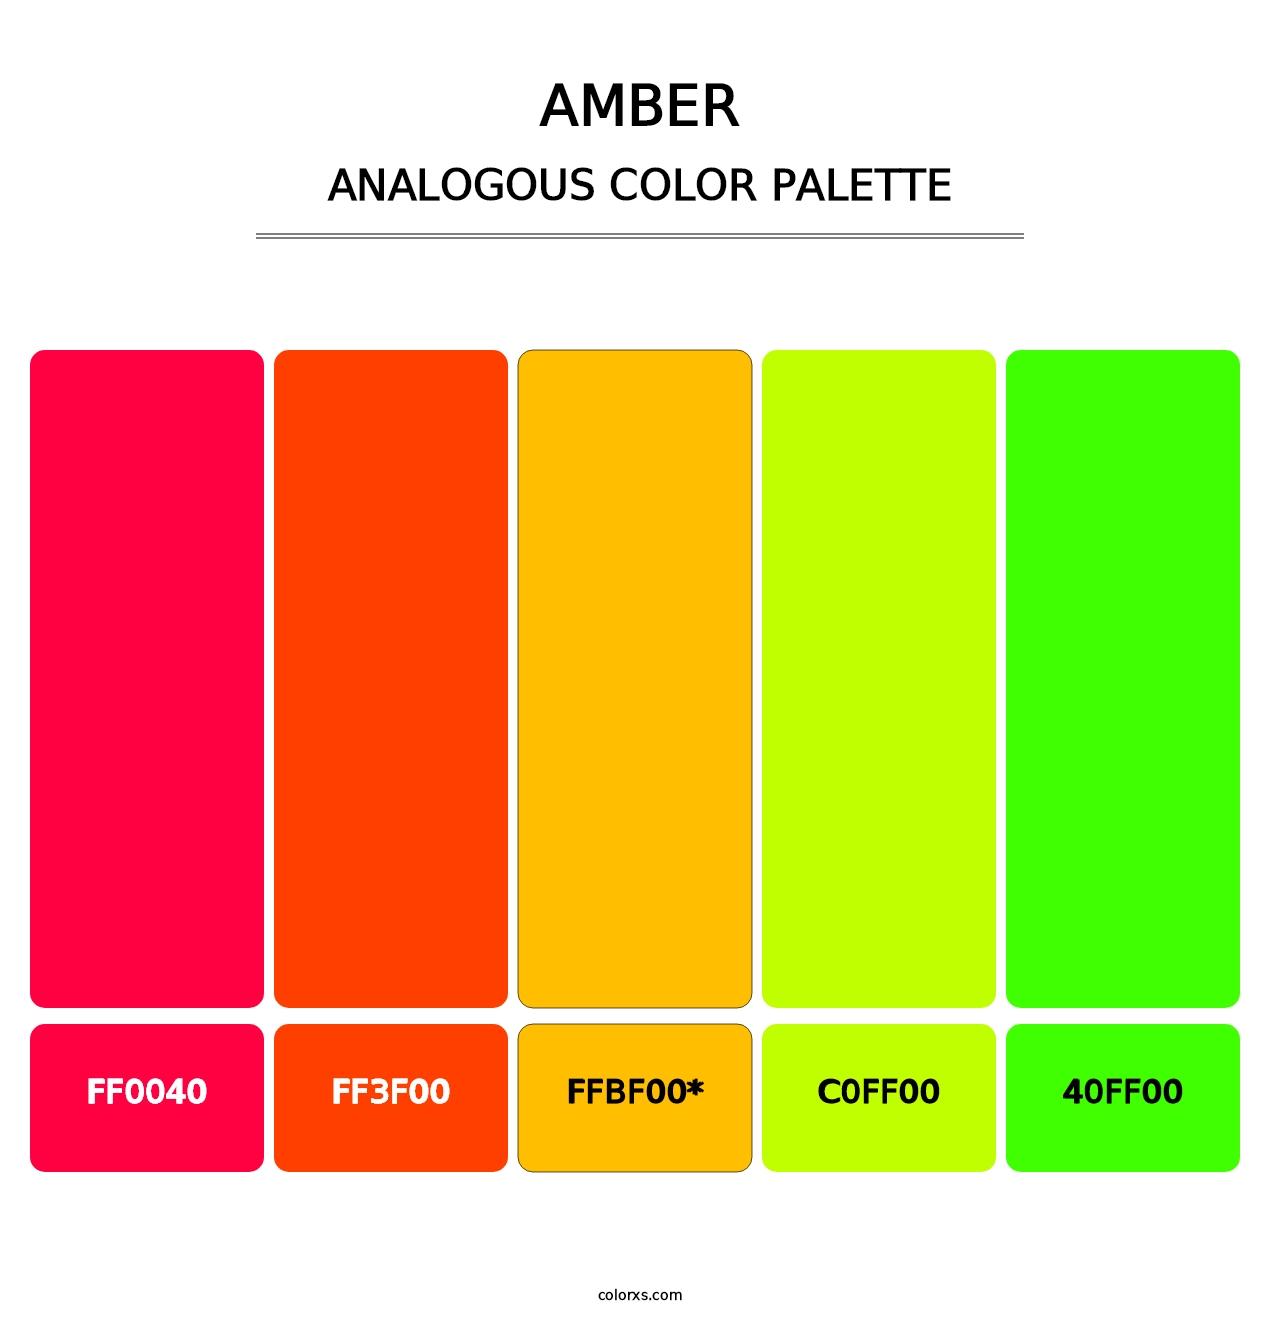 Amber - Analogous Color Palette